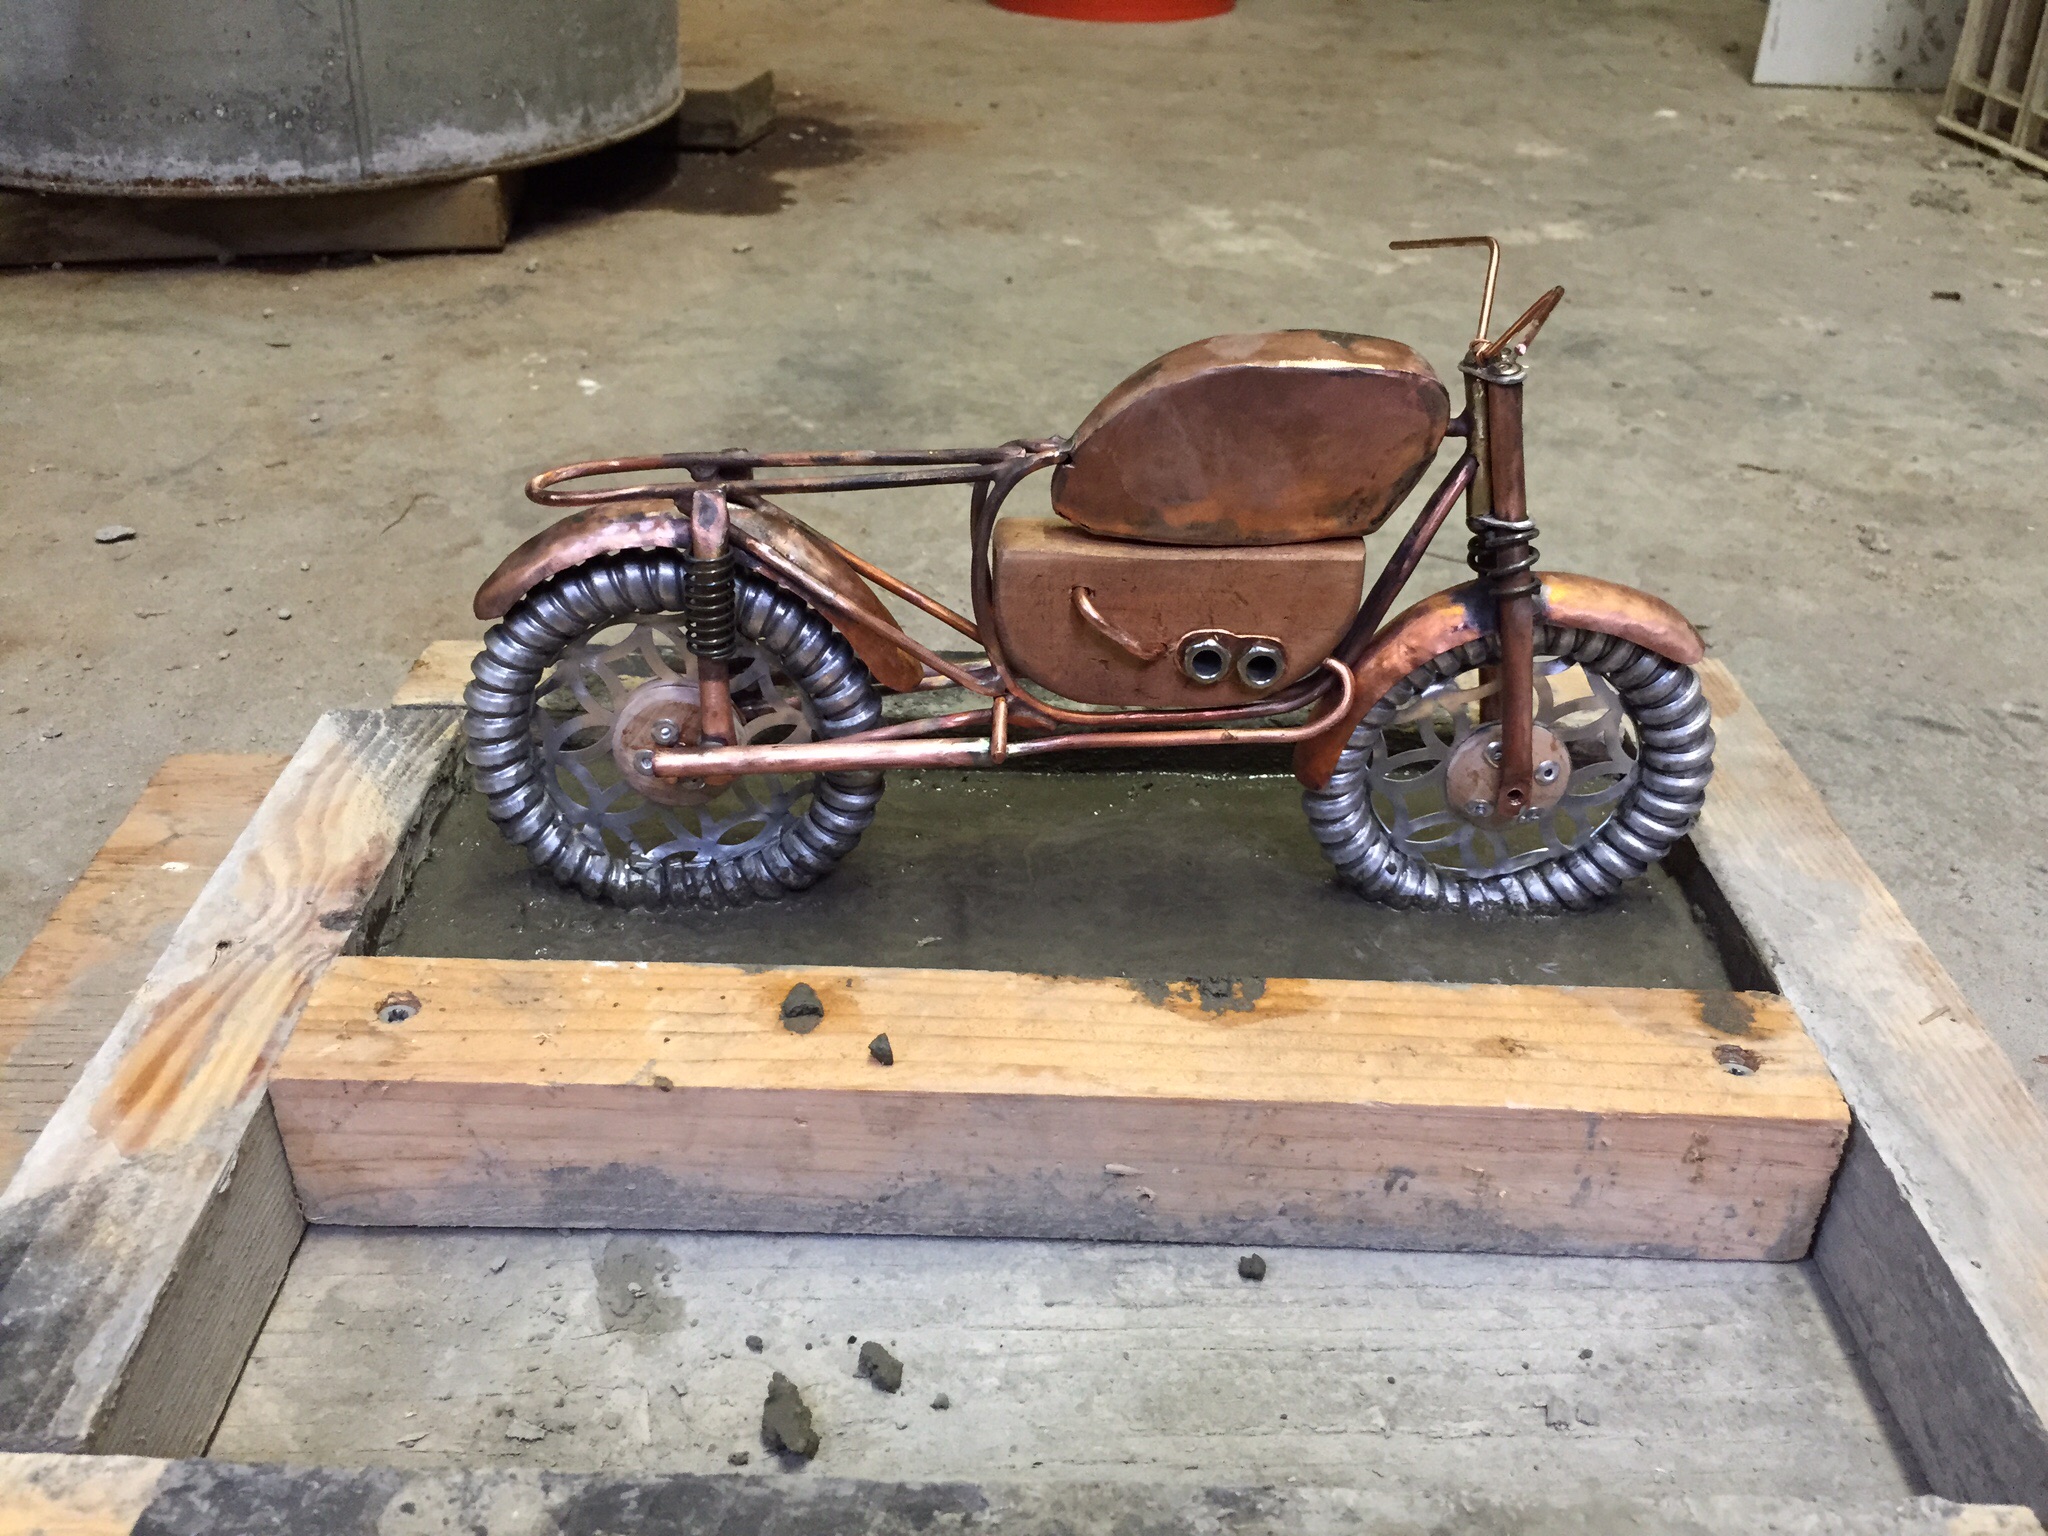 Art doll motorcycle set in concrete base